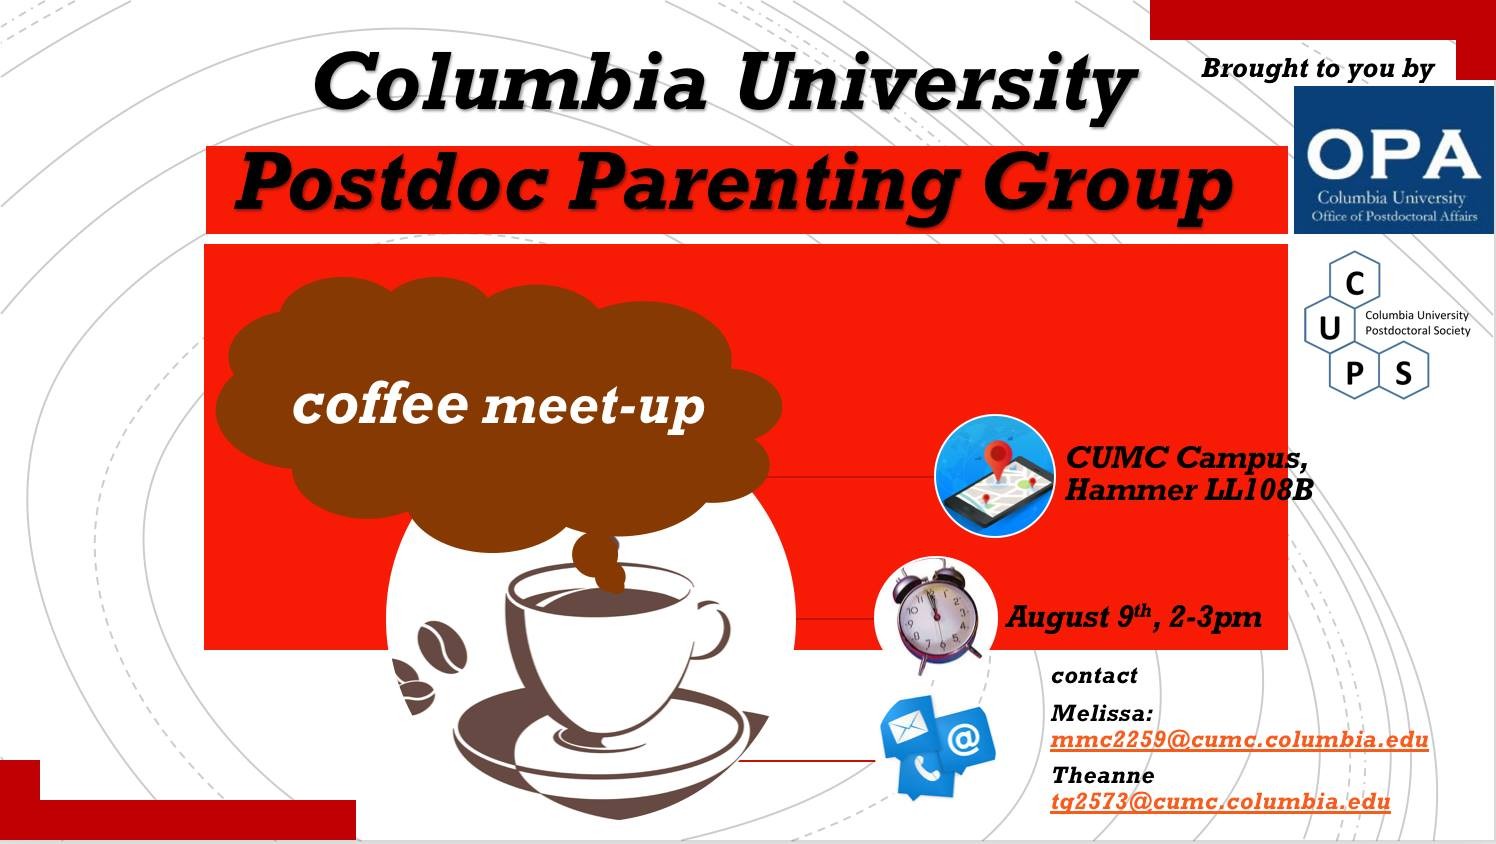 postdoc-parenting-group-meetup-coffee-time-cumc